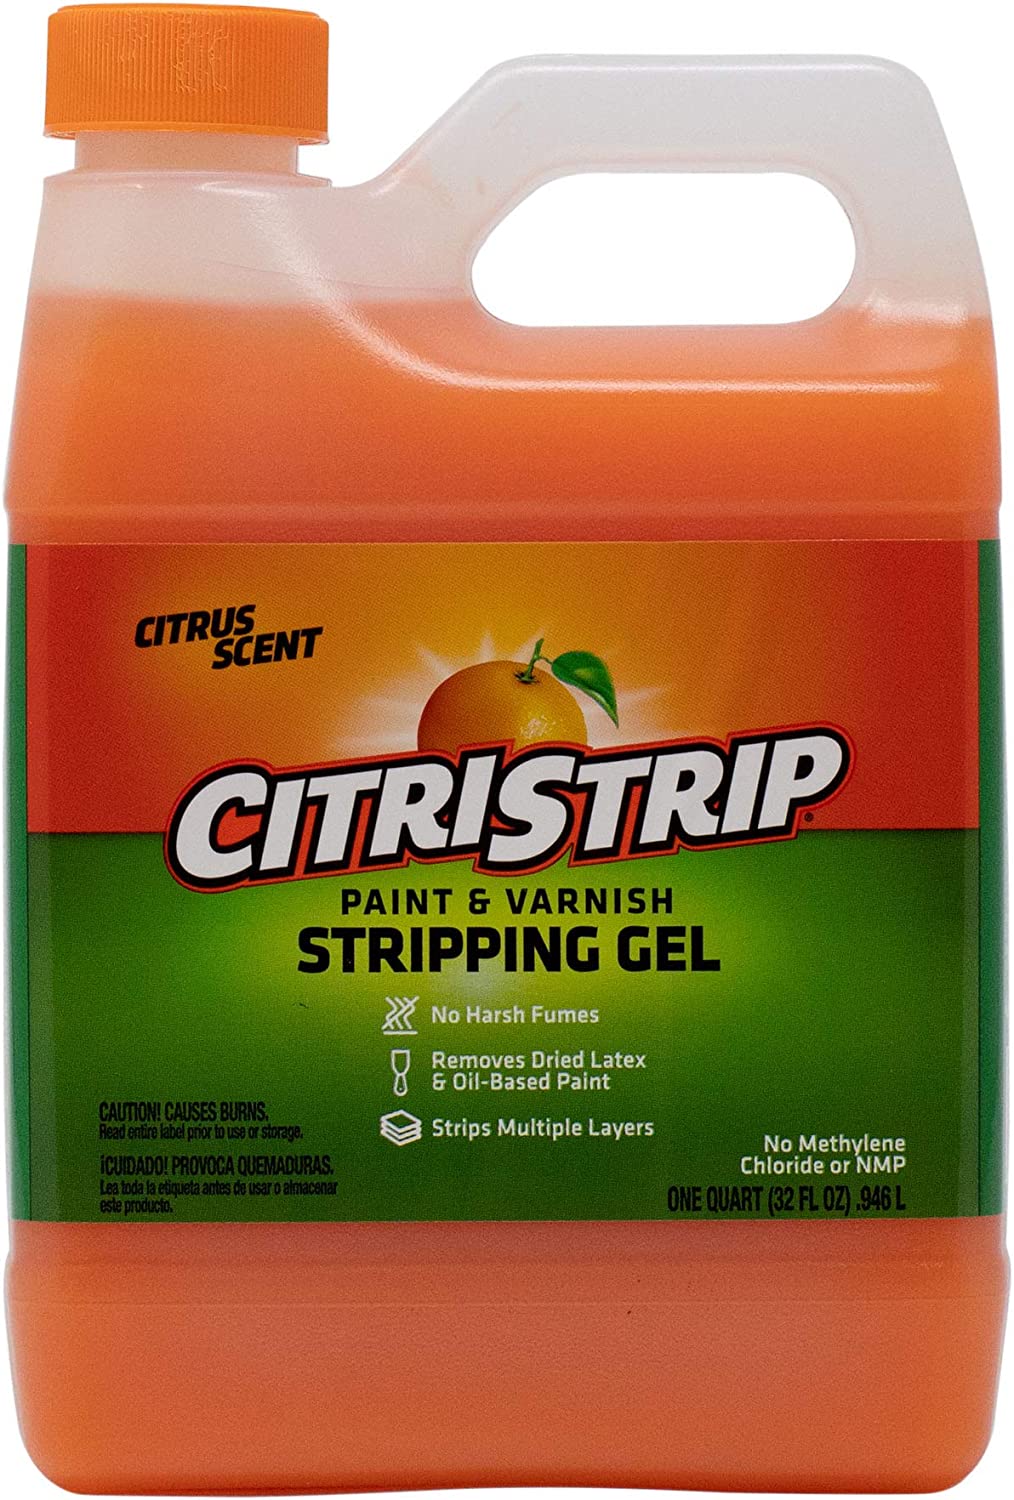 Citristrip Paint & Varnish Stripping Gel Logo